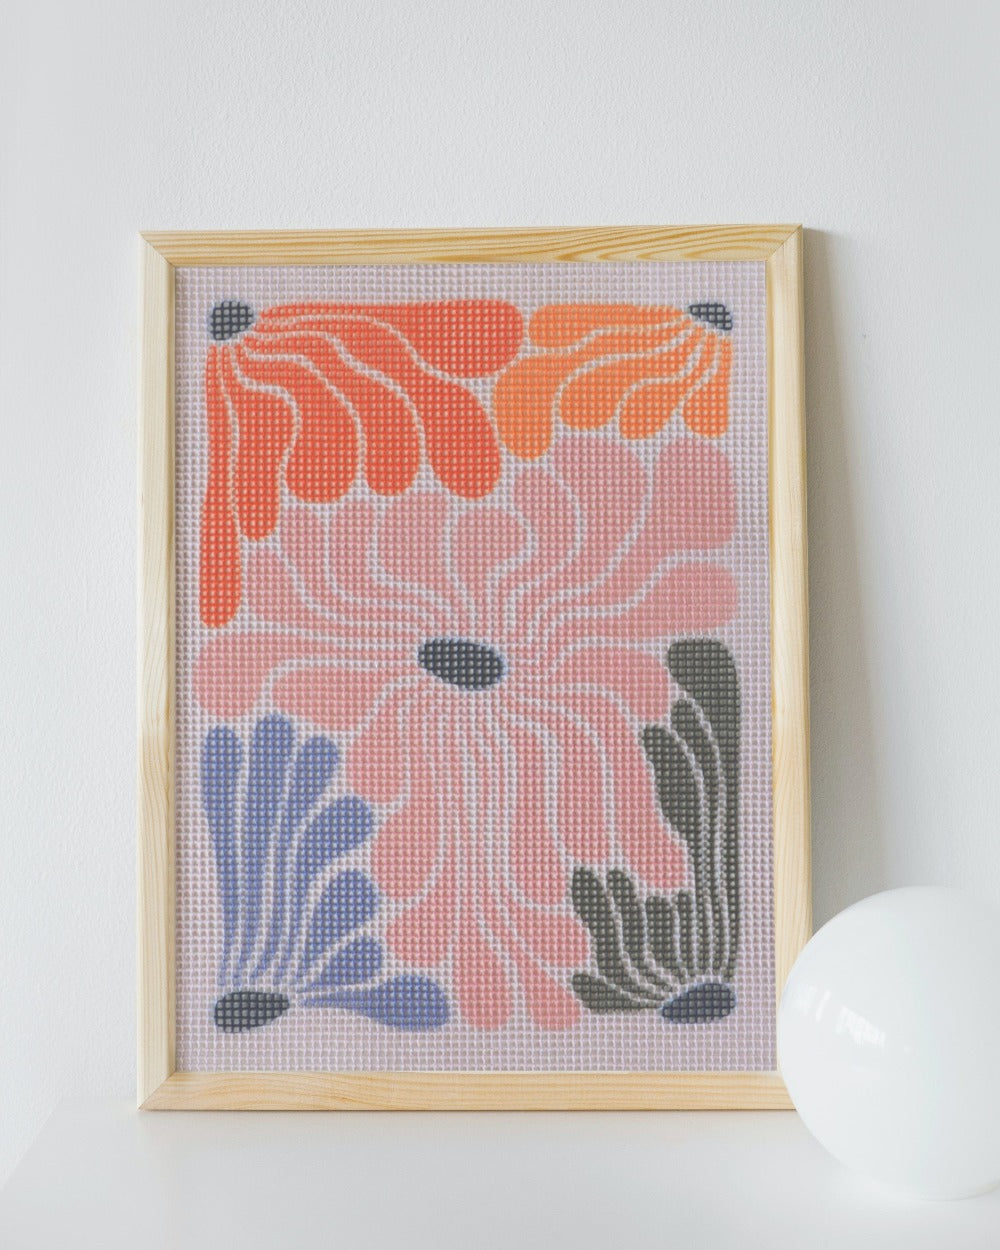 Basaloreak floral modern design needlepoint kit canvas home decor